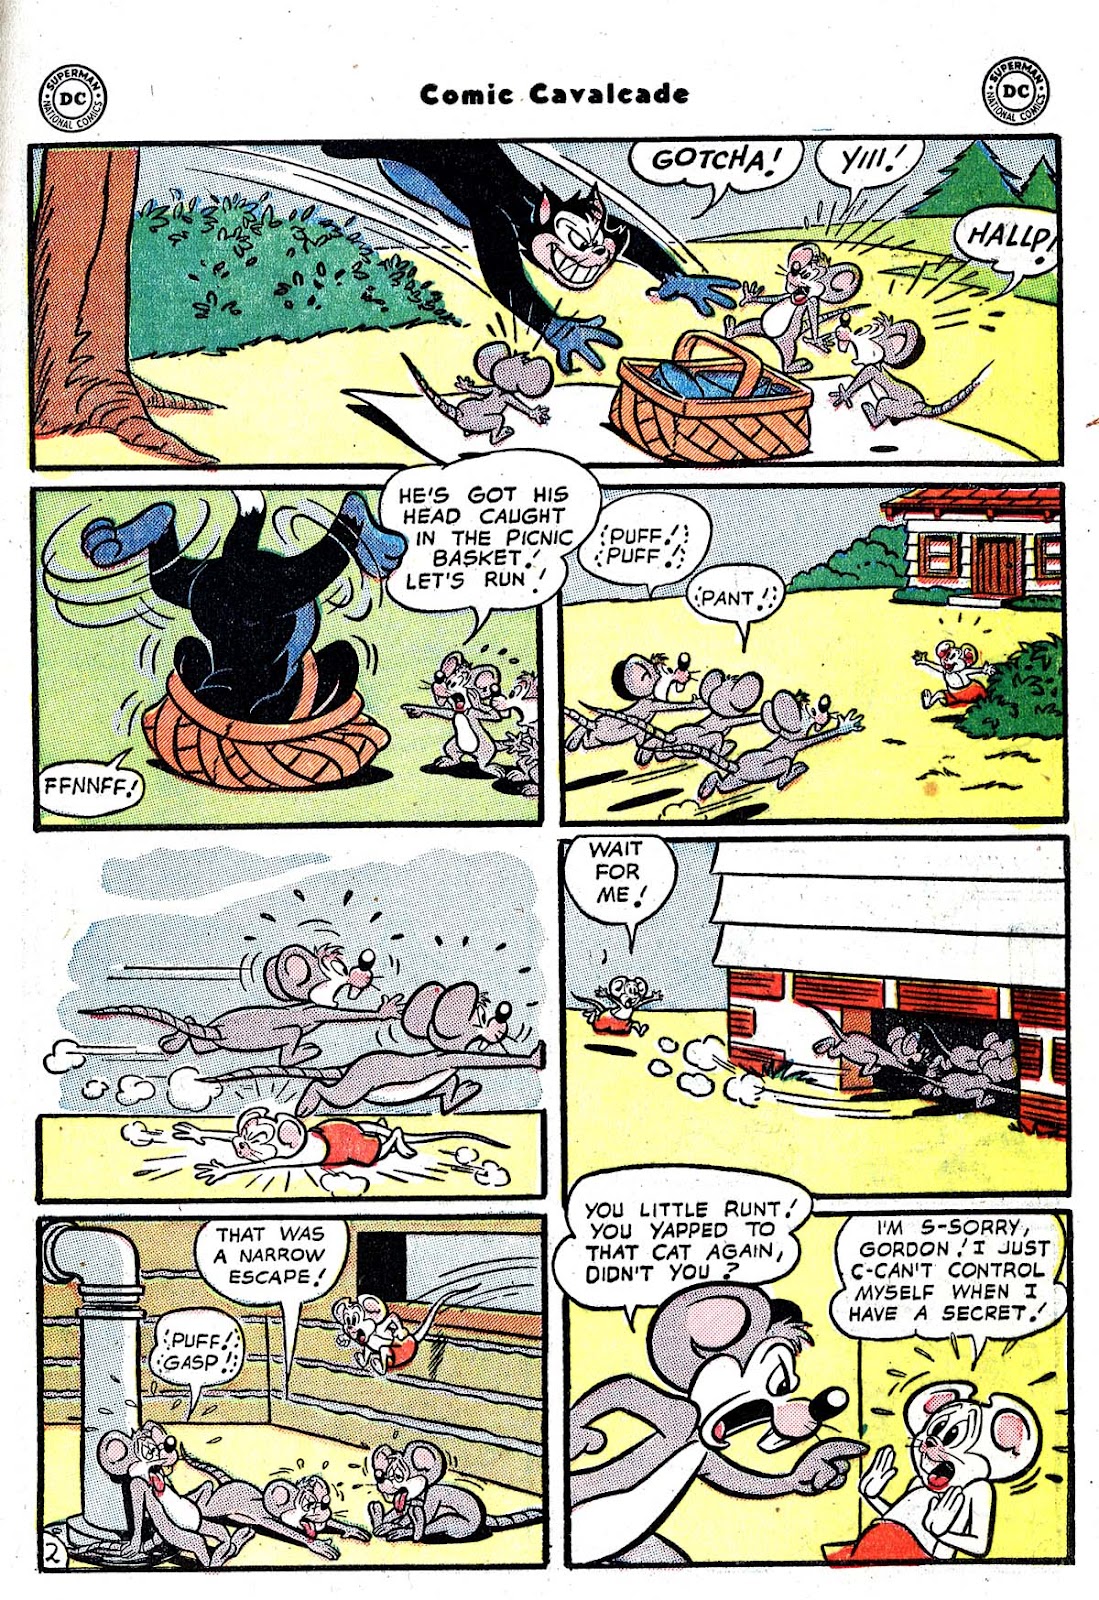 Comic Cavalcade issue 58 - Page 57